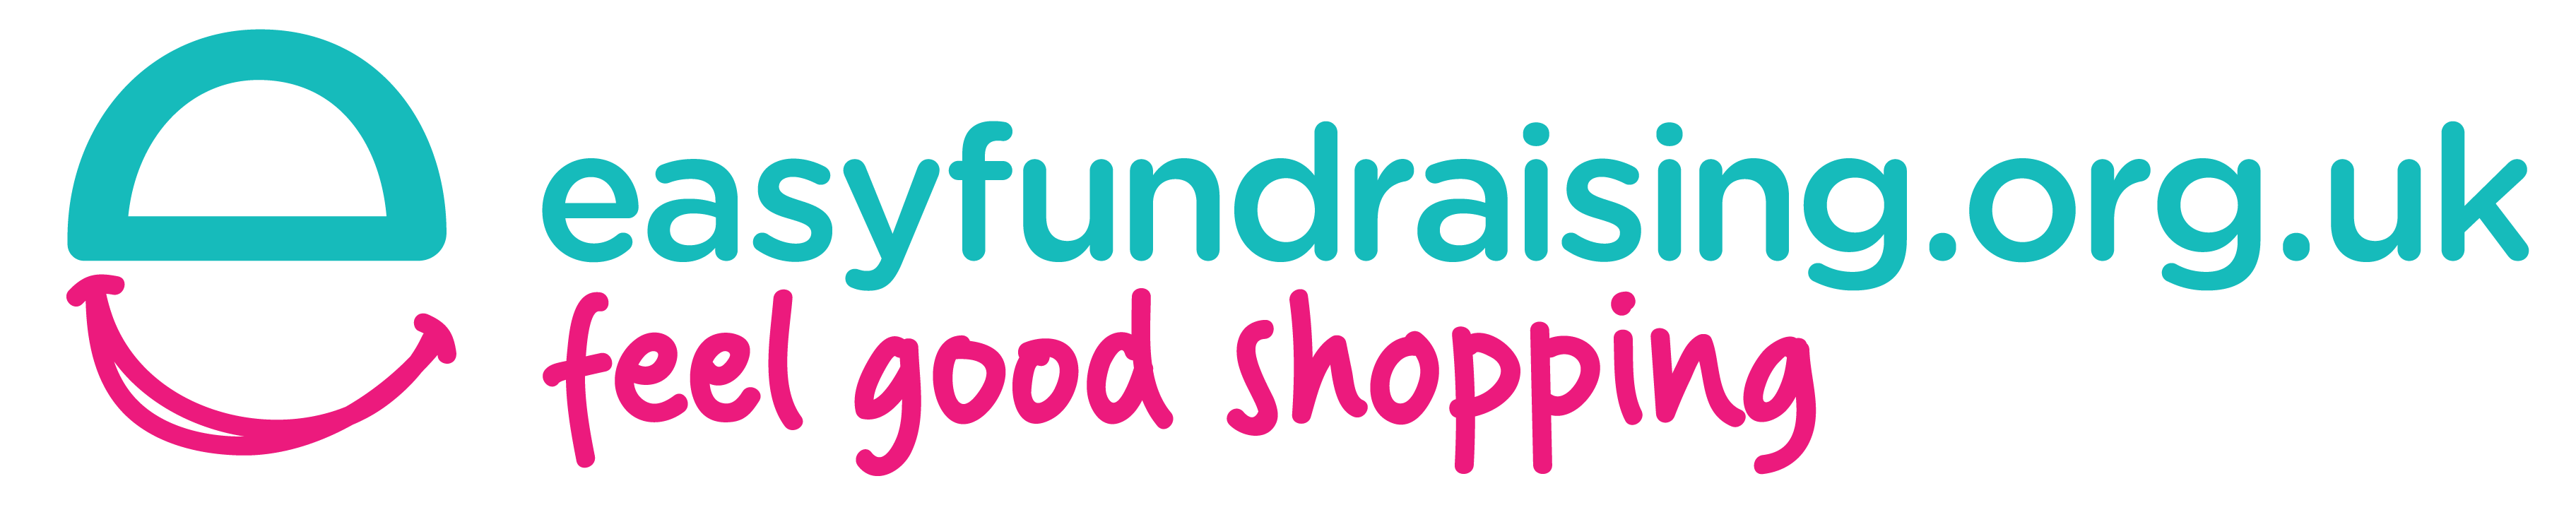 easyfundraising logo transparent